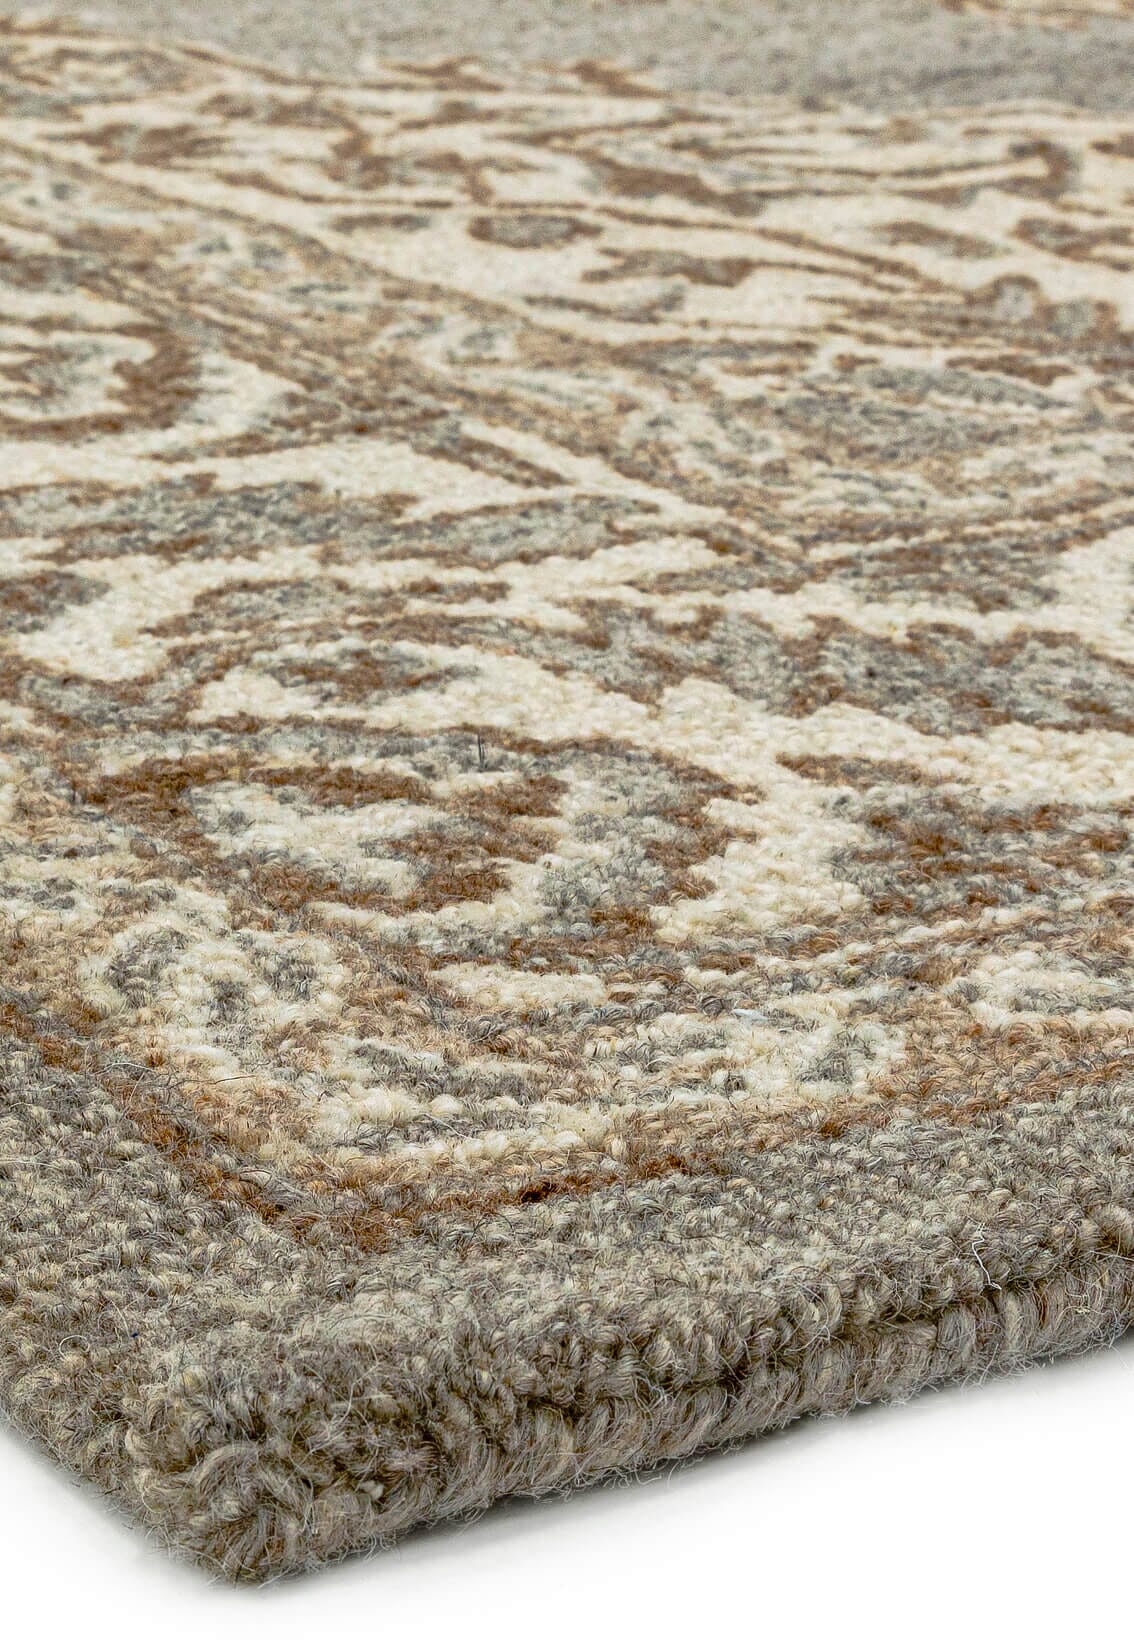  Asiatic Carpets-Asiatic Carpets Bronte Fine Loop Hand Tufted Rug Natural - 160 x 230cm-Beige, Natural 757 